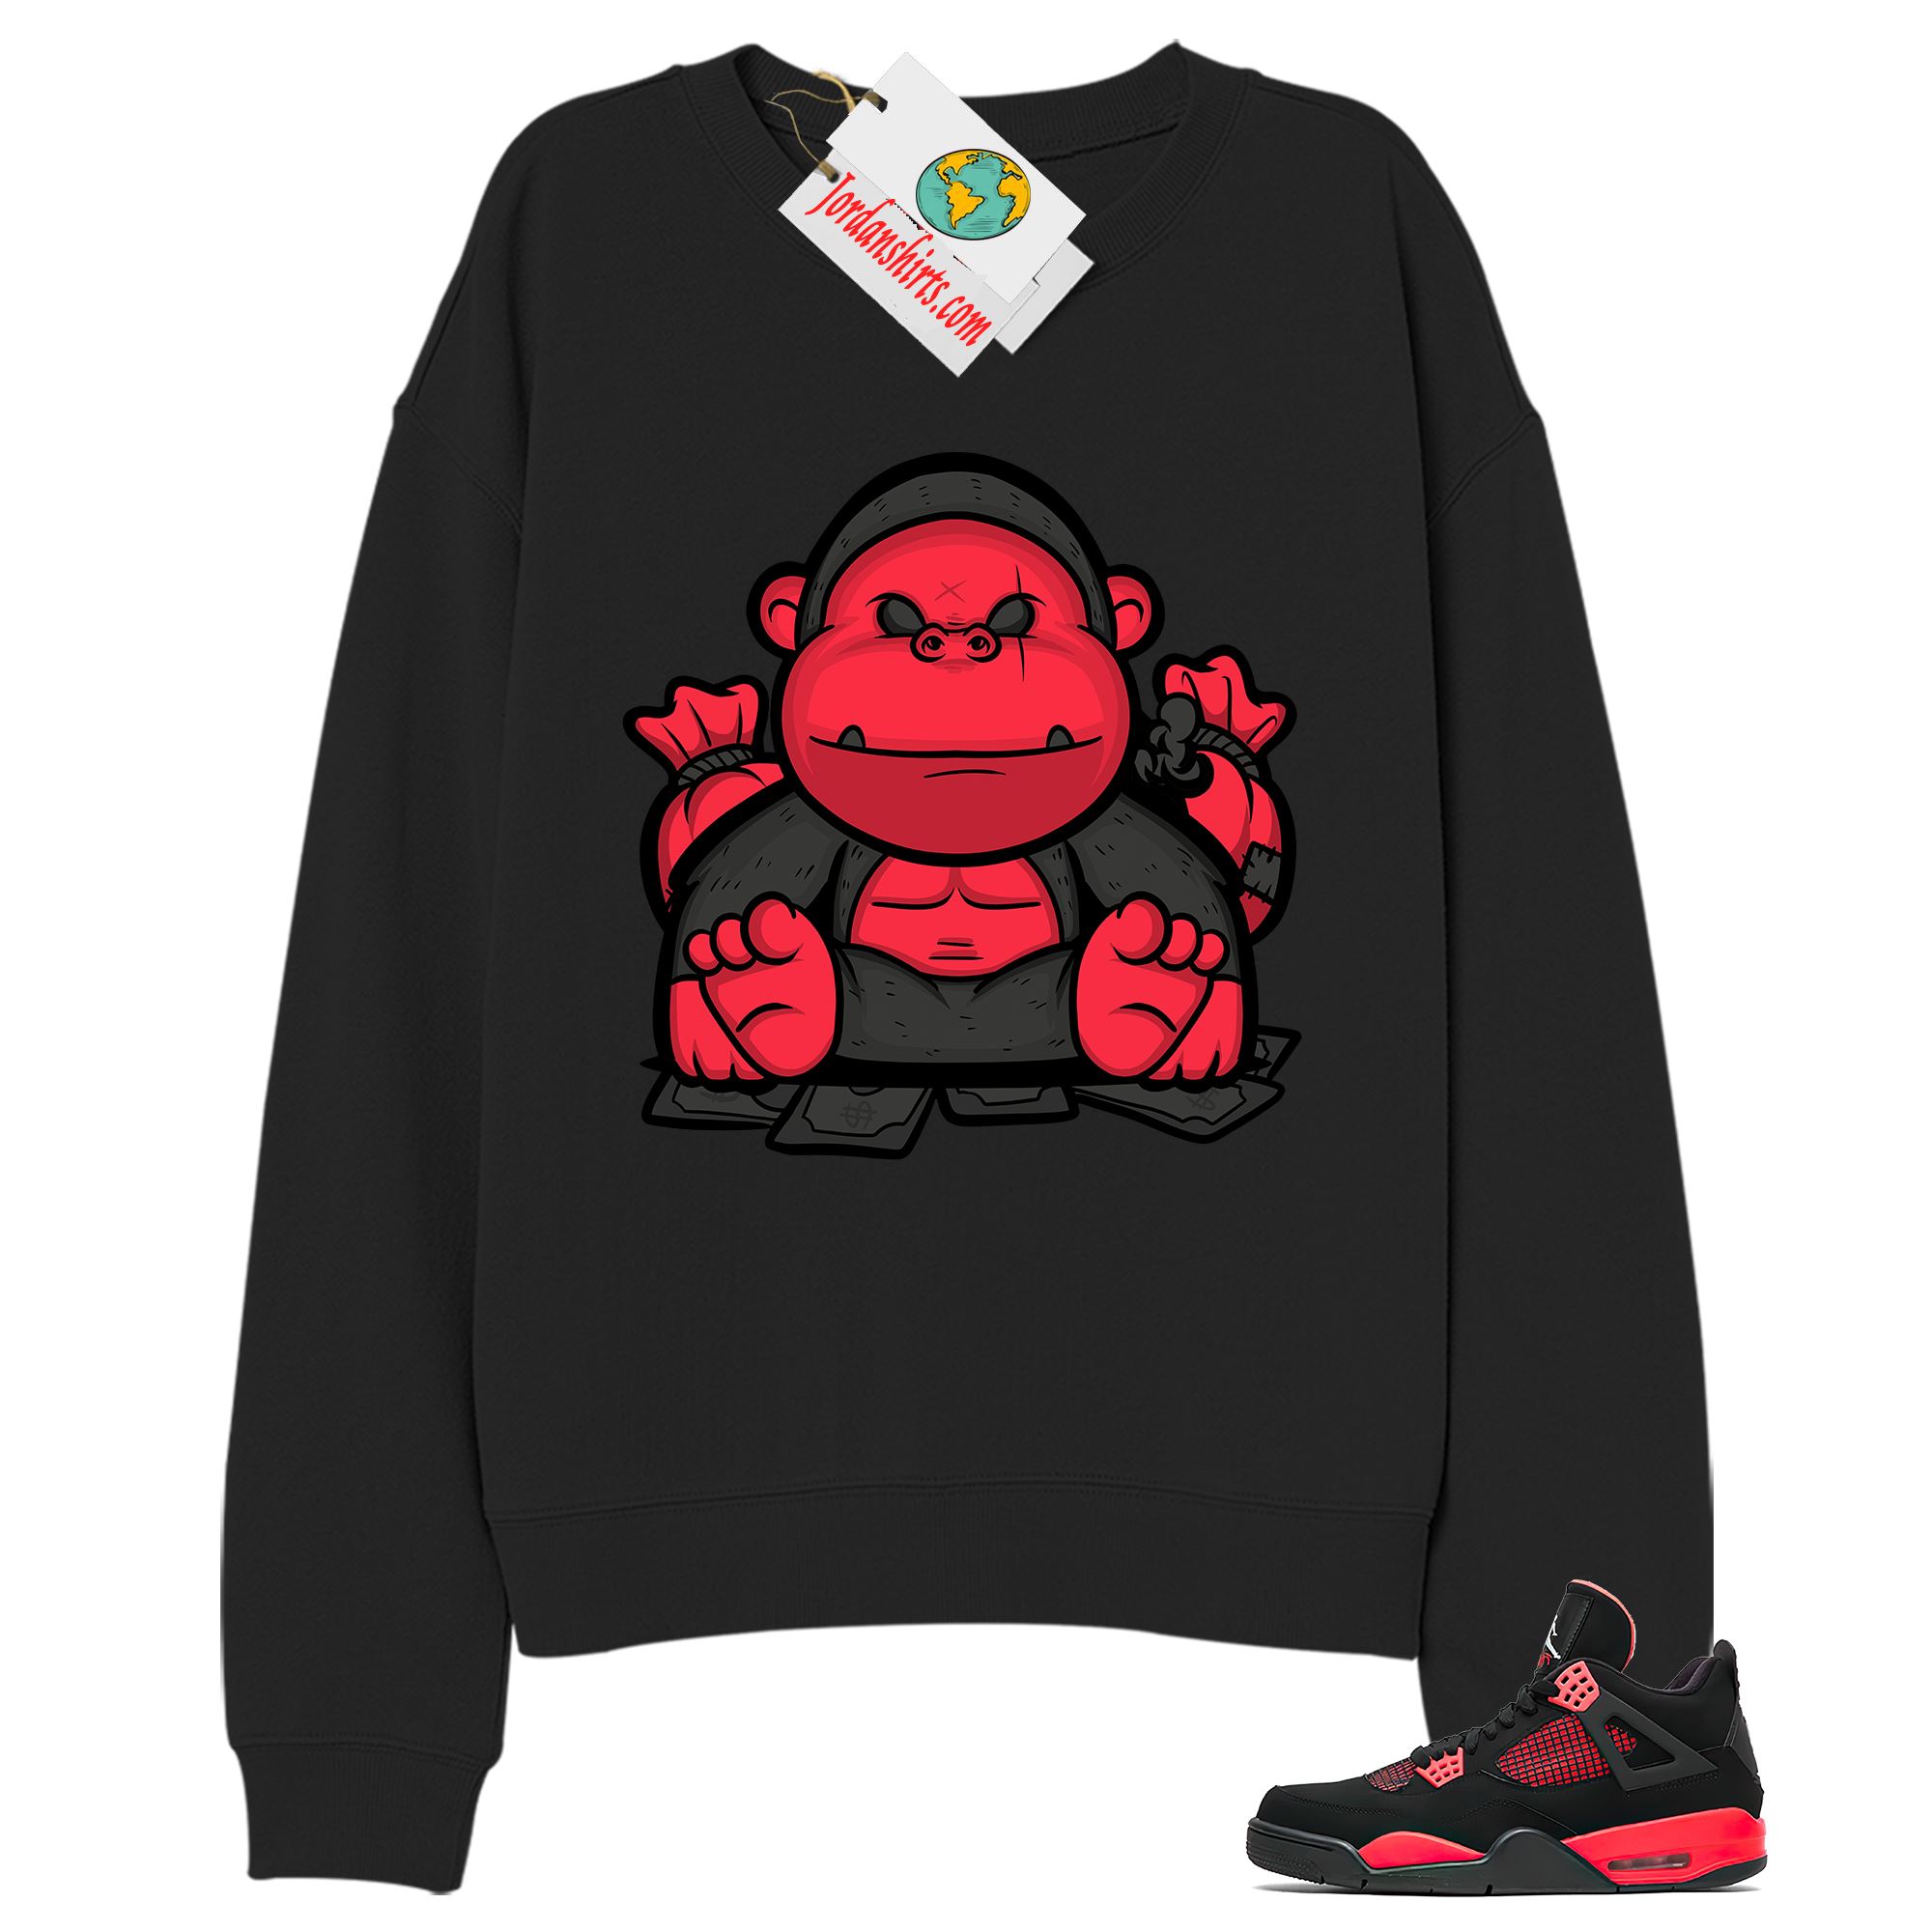 Jordan 4 Sweatshirt, Rich Gorilla With Money Black Sweatshirt Air Jordan 4 Red Thunder 4s Size Up To 5xl